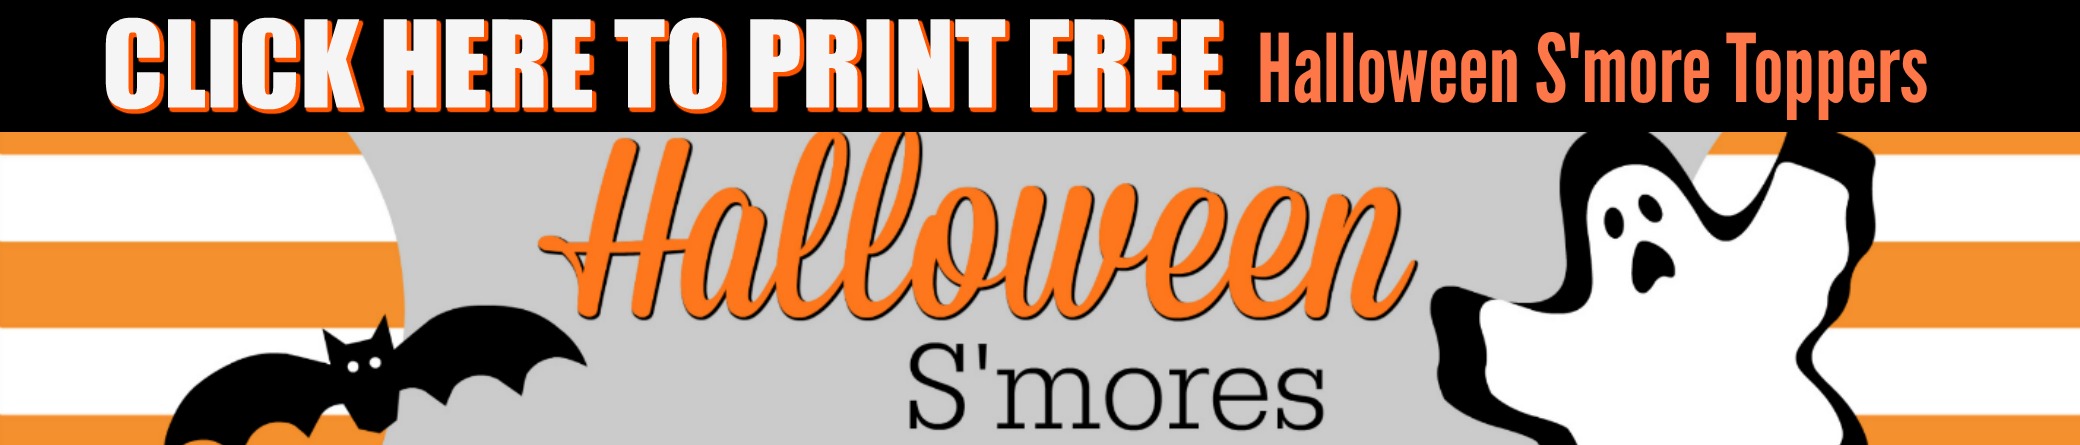 Make Halloween S Mores Kits With Our Free Printable Bag Toppers Hip2save